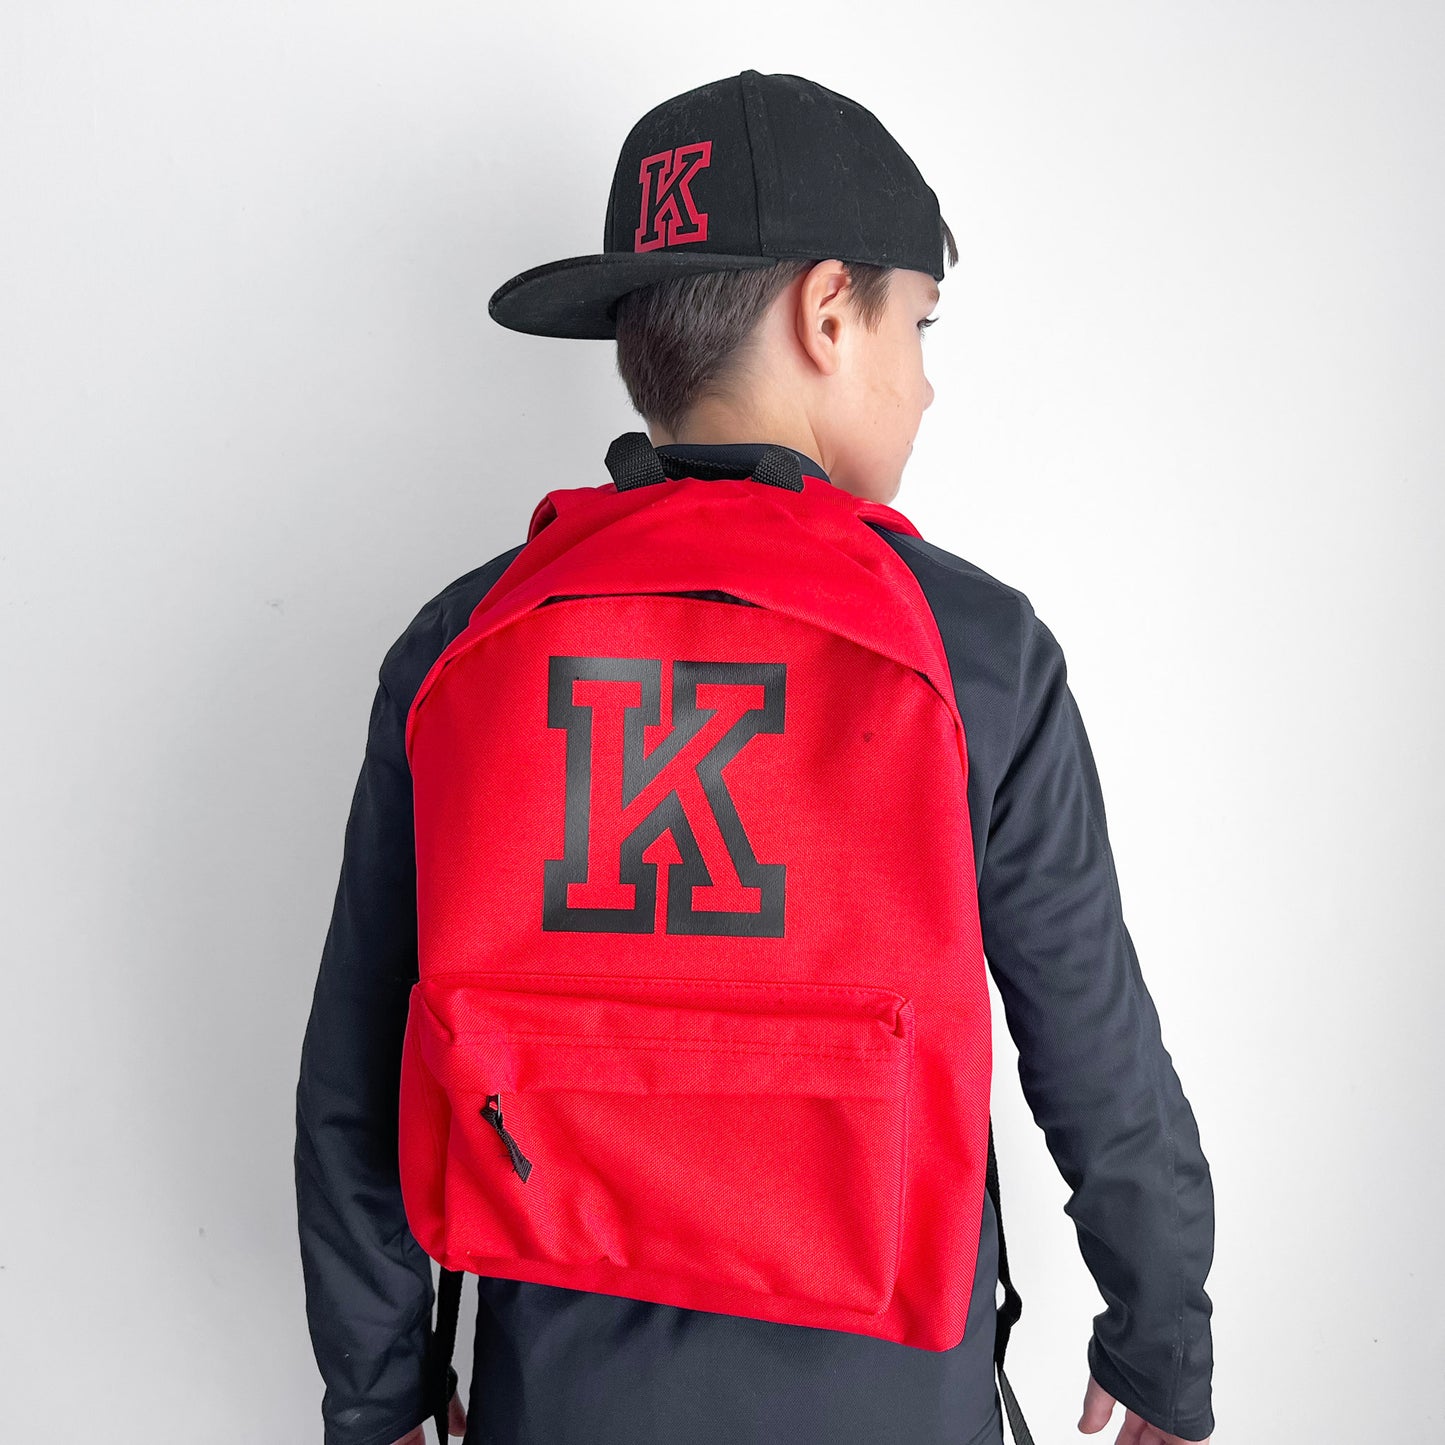 =All Star Initial Junior Backpack